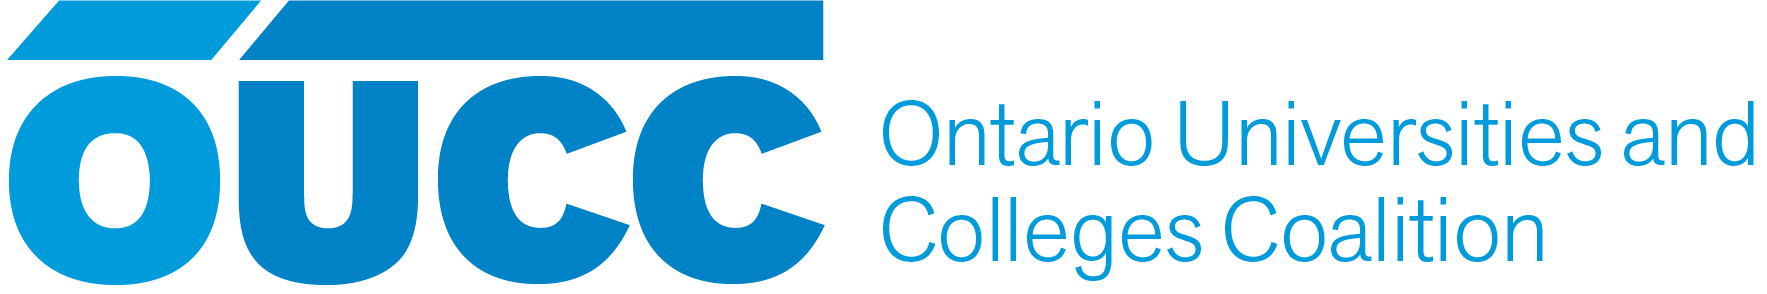 Ontario Universities